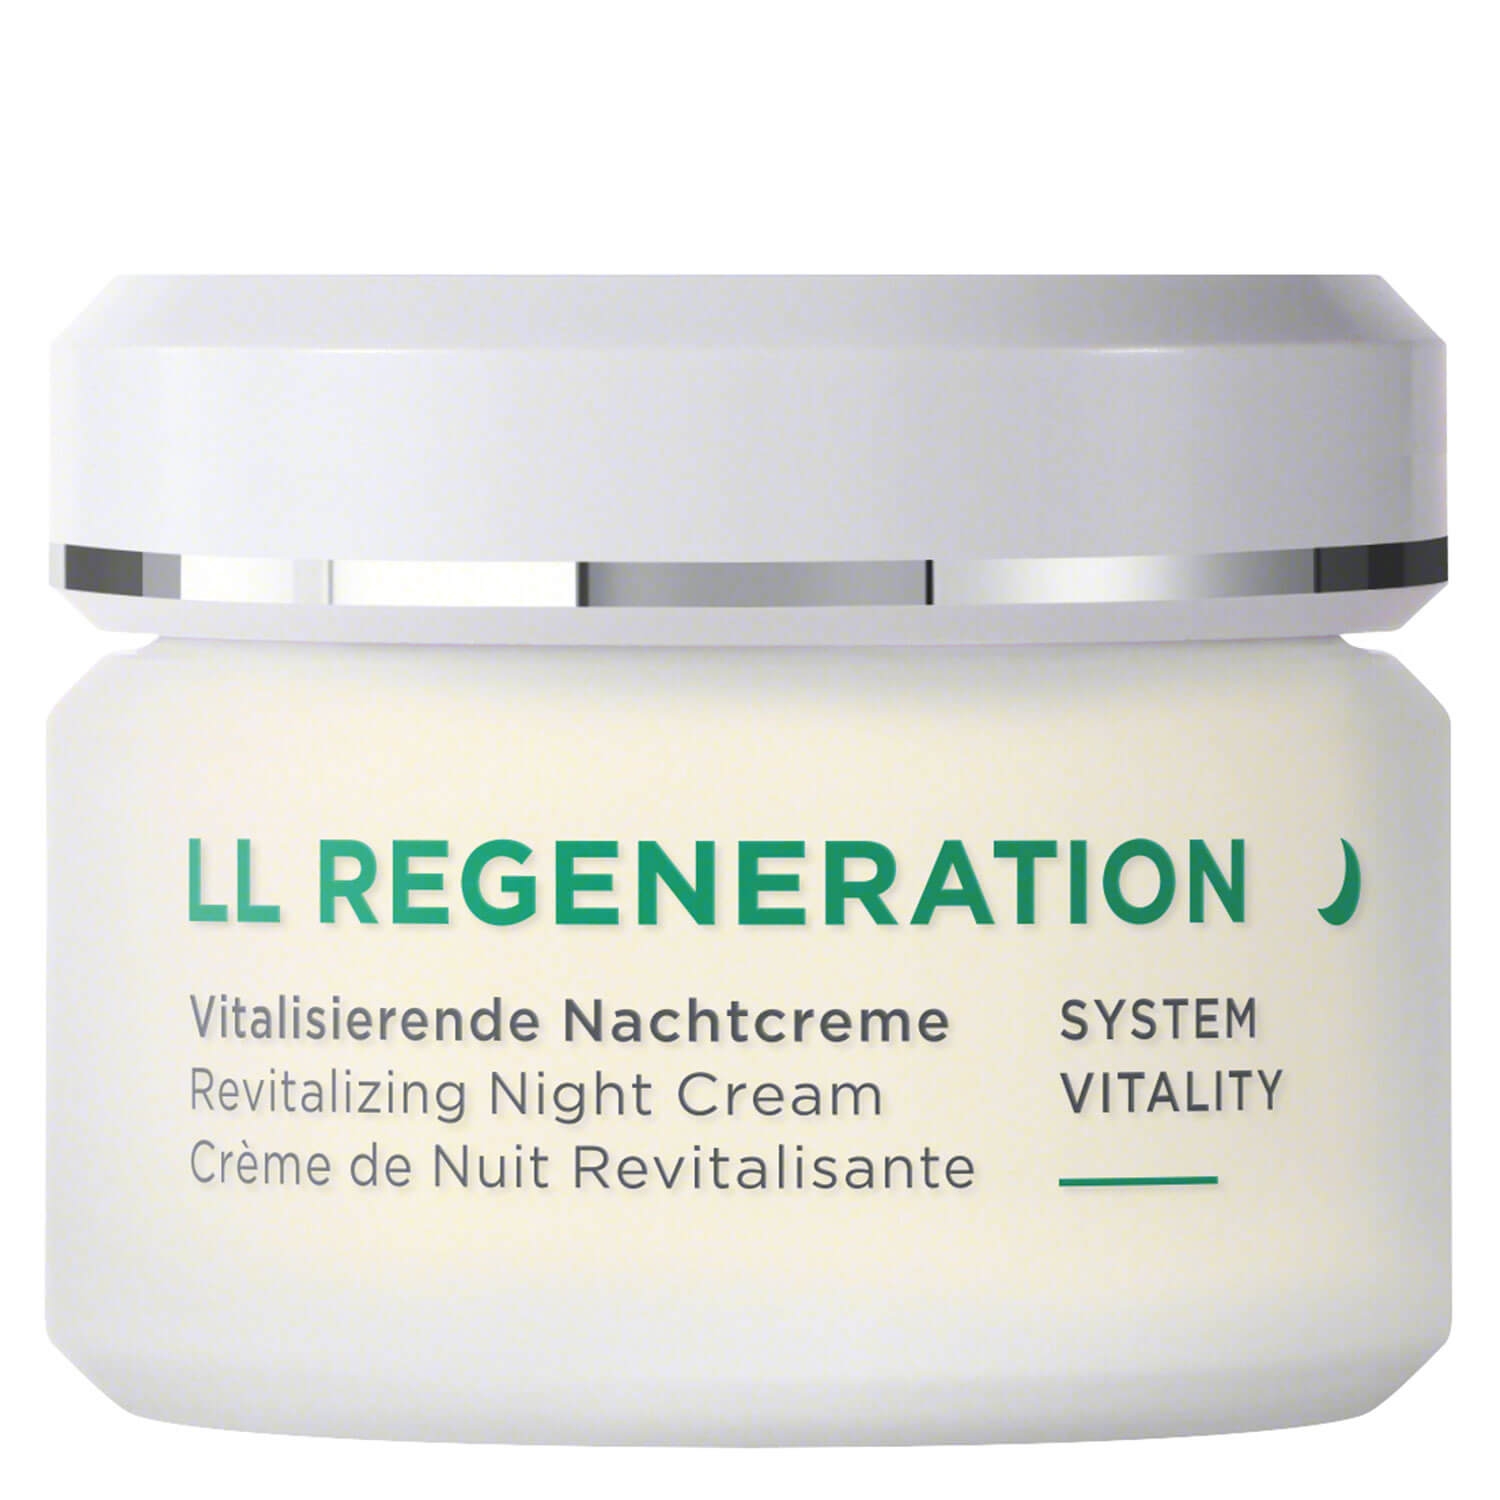 Product image from LL Regeneration - Vitalisierende Nachtcreme